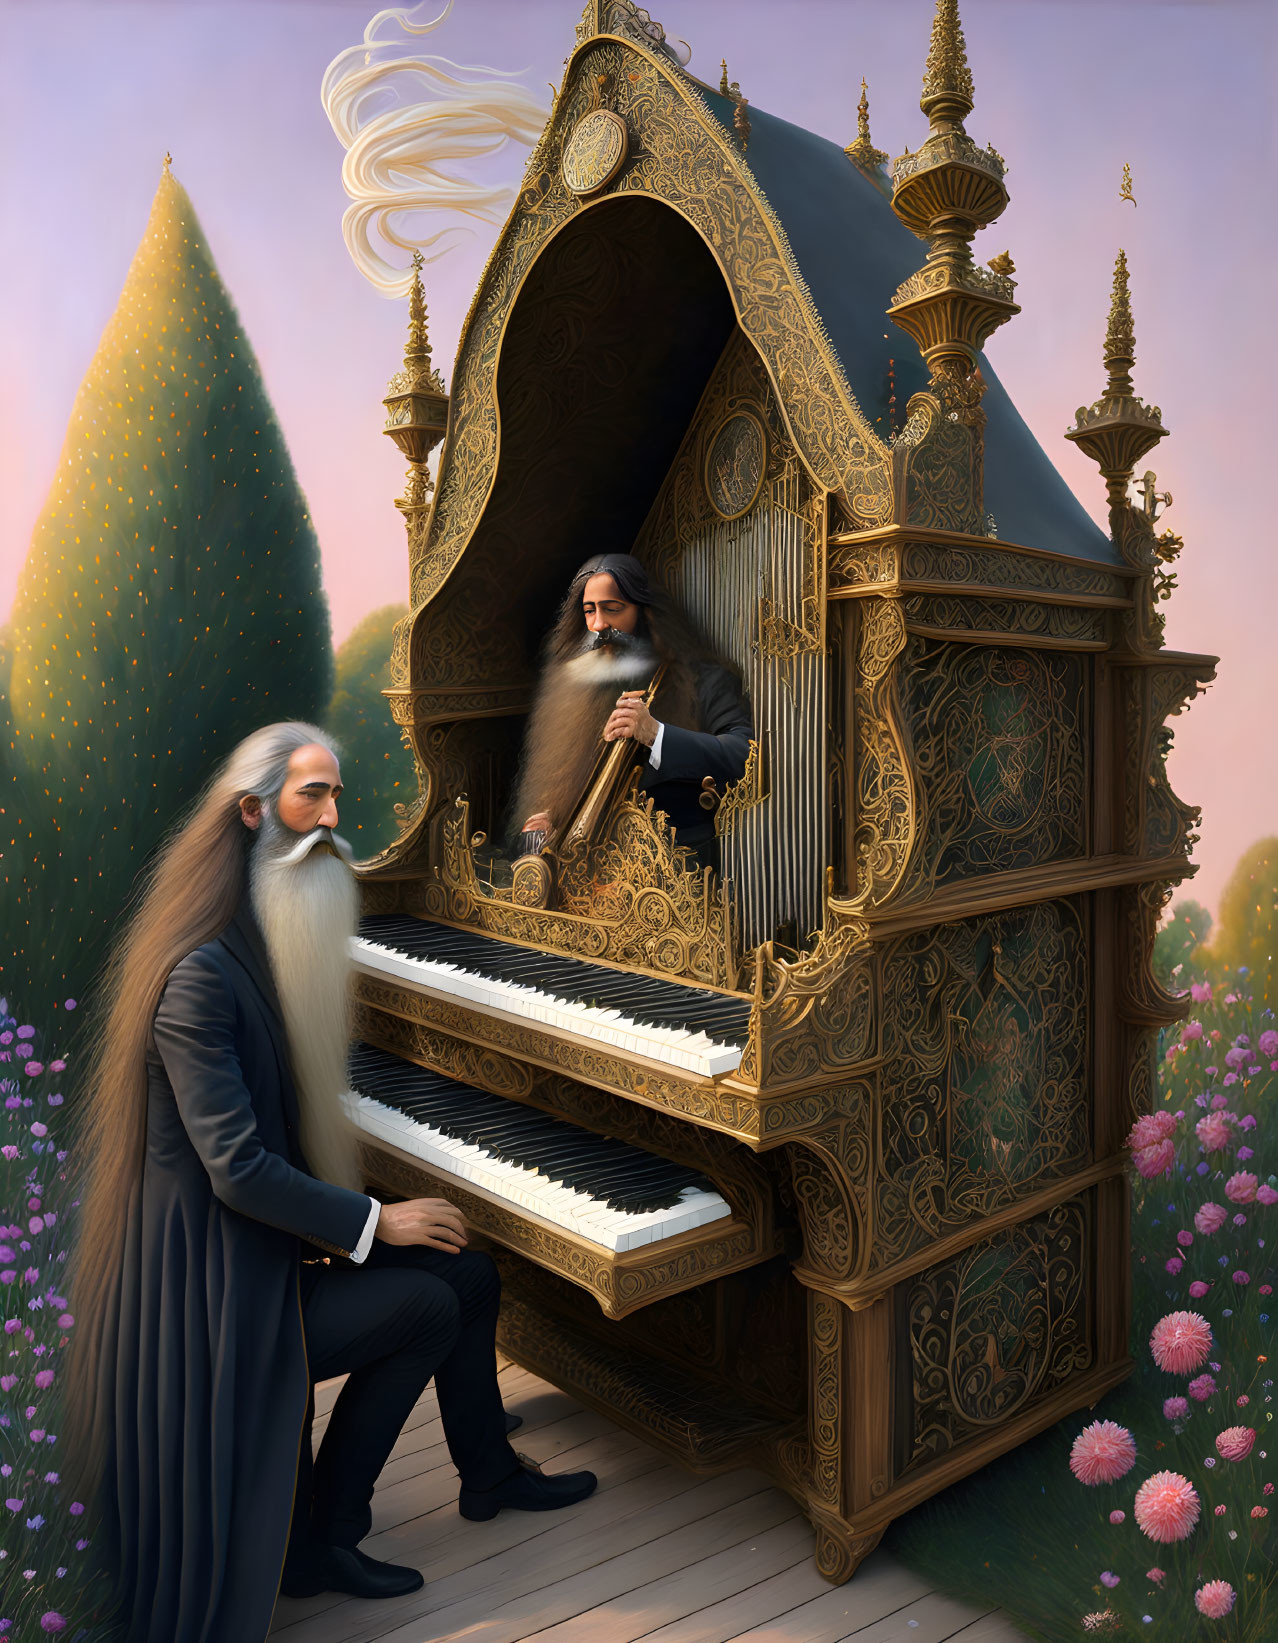 Organ in the Secret Garden